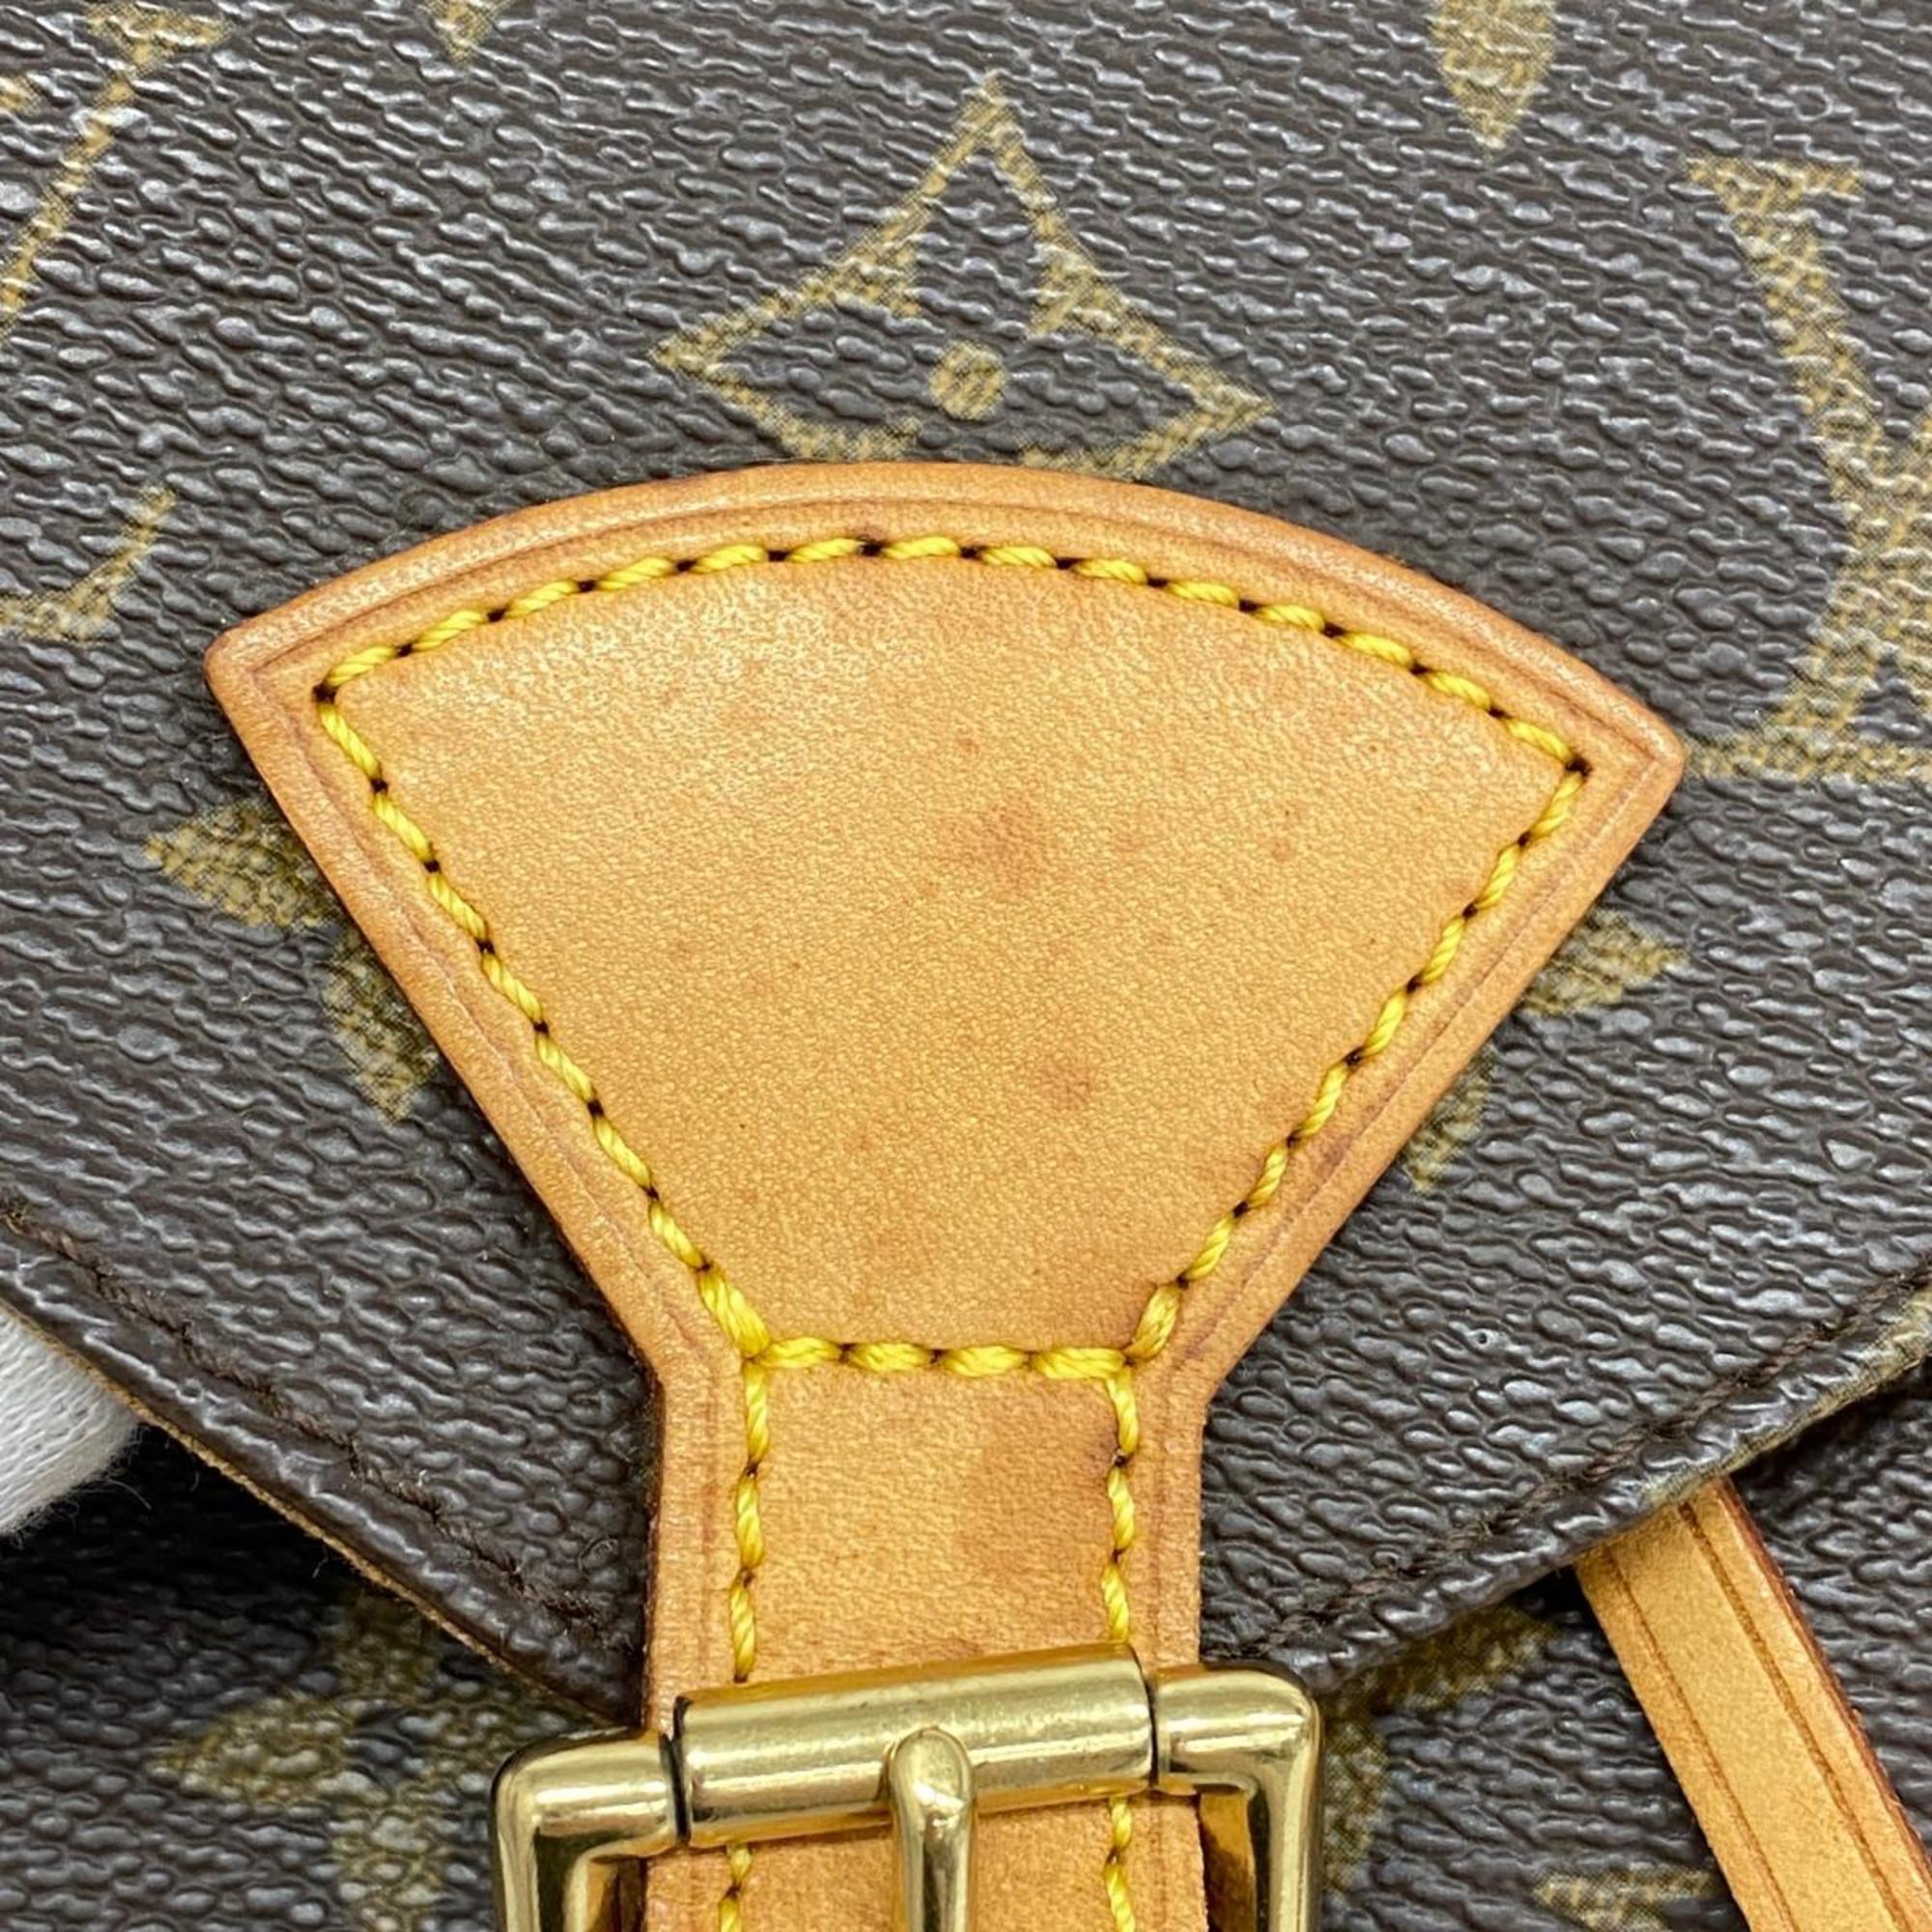 Louis Vuitton Backpack Monogram Montsouris MM M51136 Brown Women's